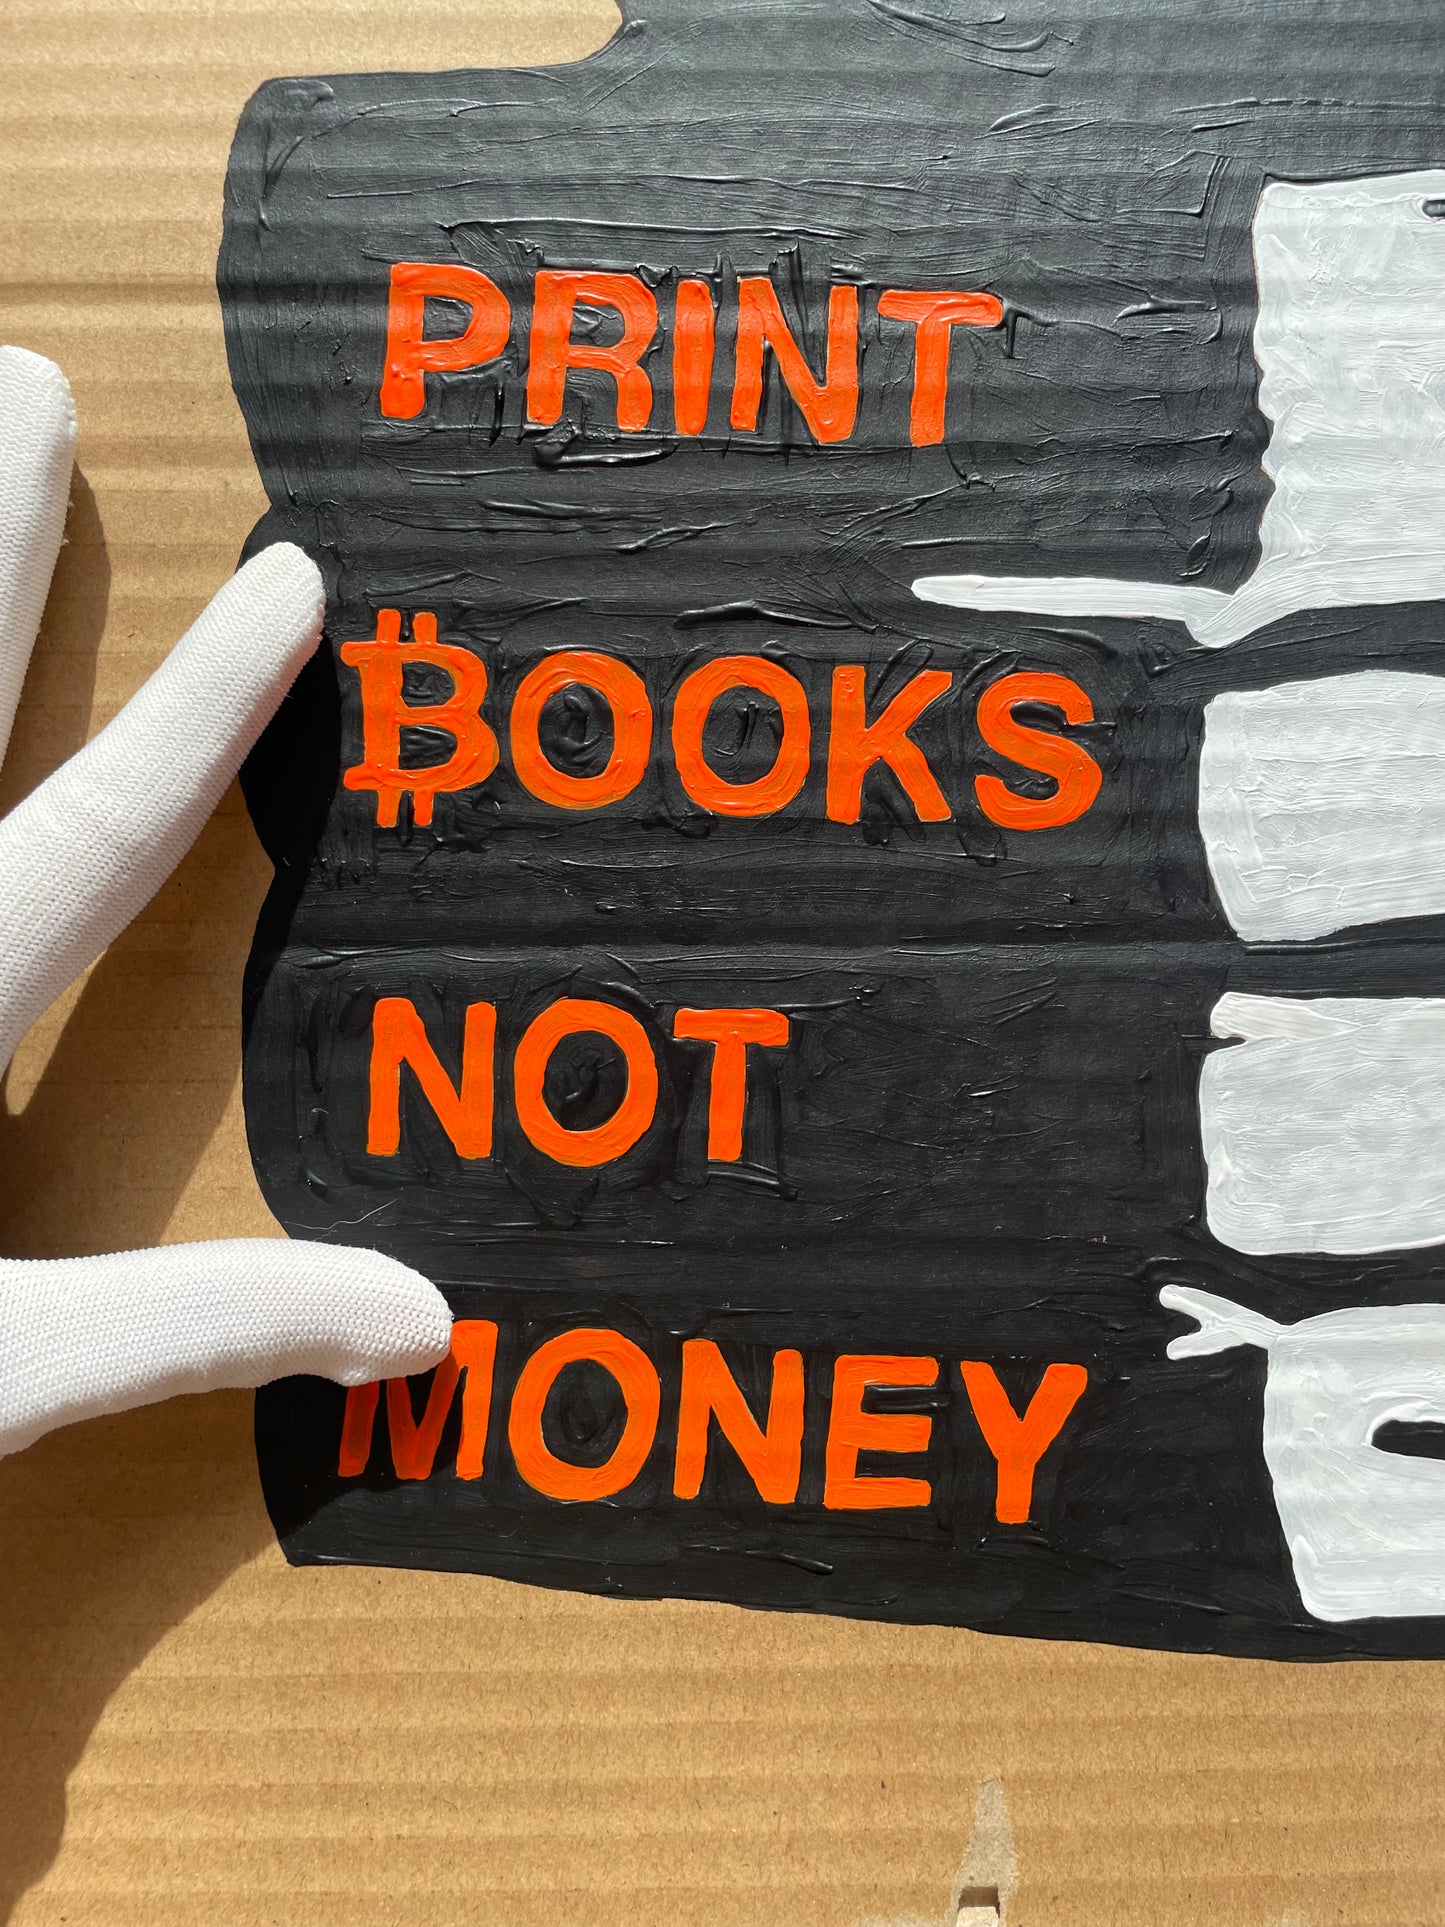 Acrylic Paint on Cardboard "Print Books, Not Money"